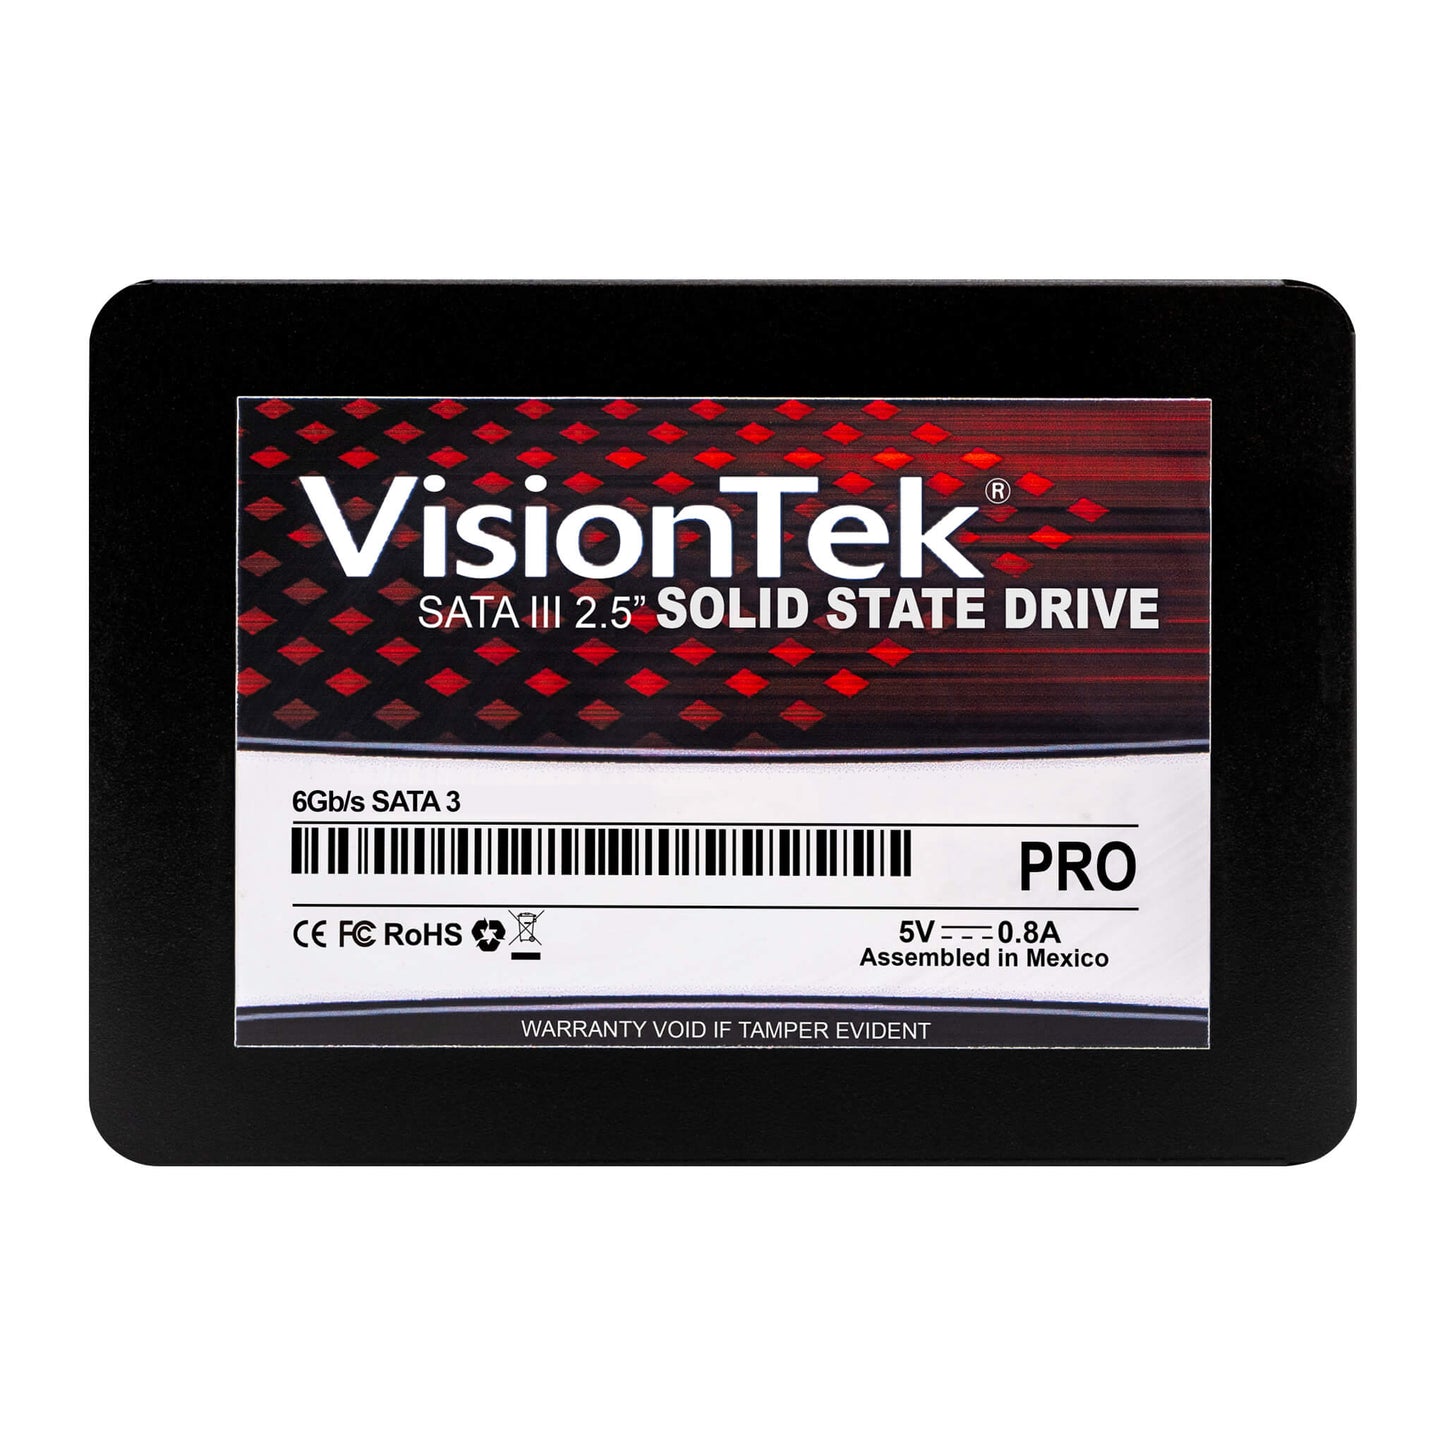 VisionTek Pro 7mm 2.5" SSD (SATA)